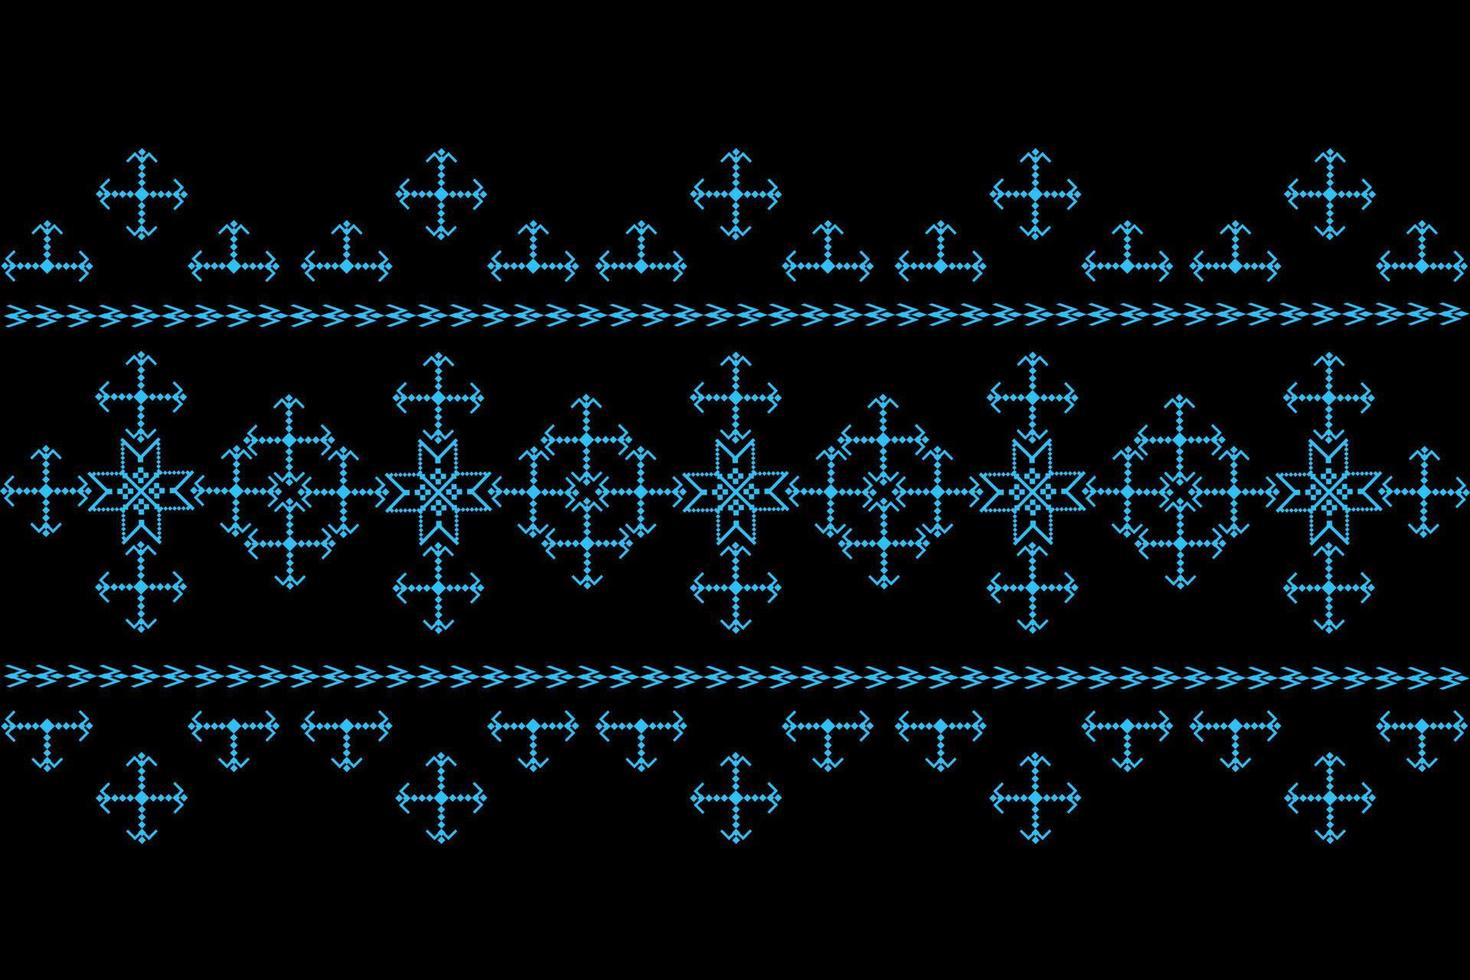 färgad geometrisk siffror av etnisk broderi. ukrainska mönster. etnisk prydnad. korsstygn. vektor illustration på en svart bakgrund.